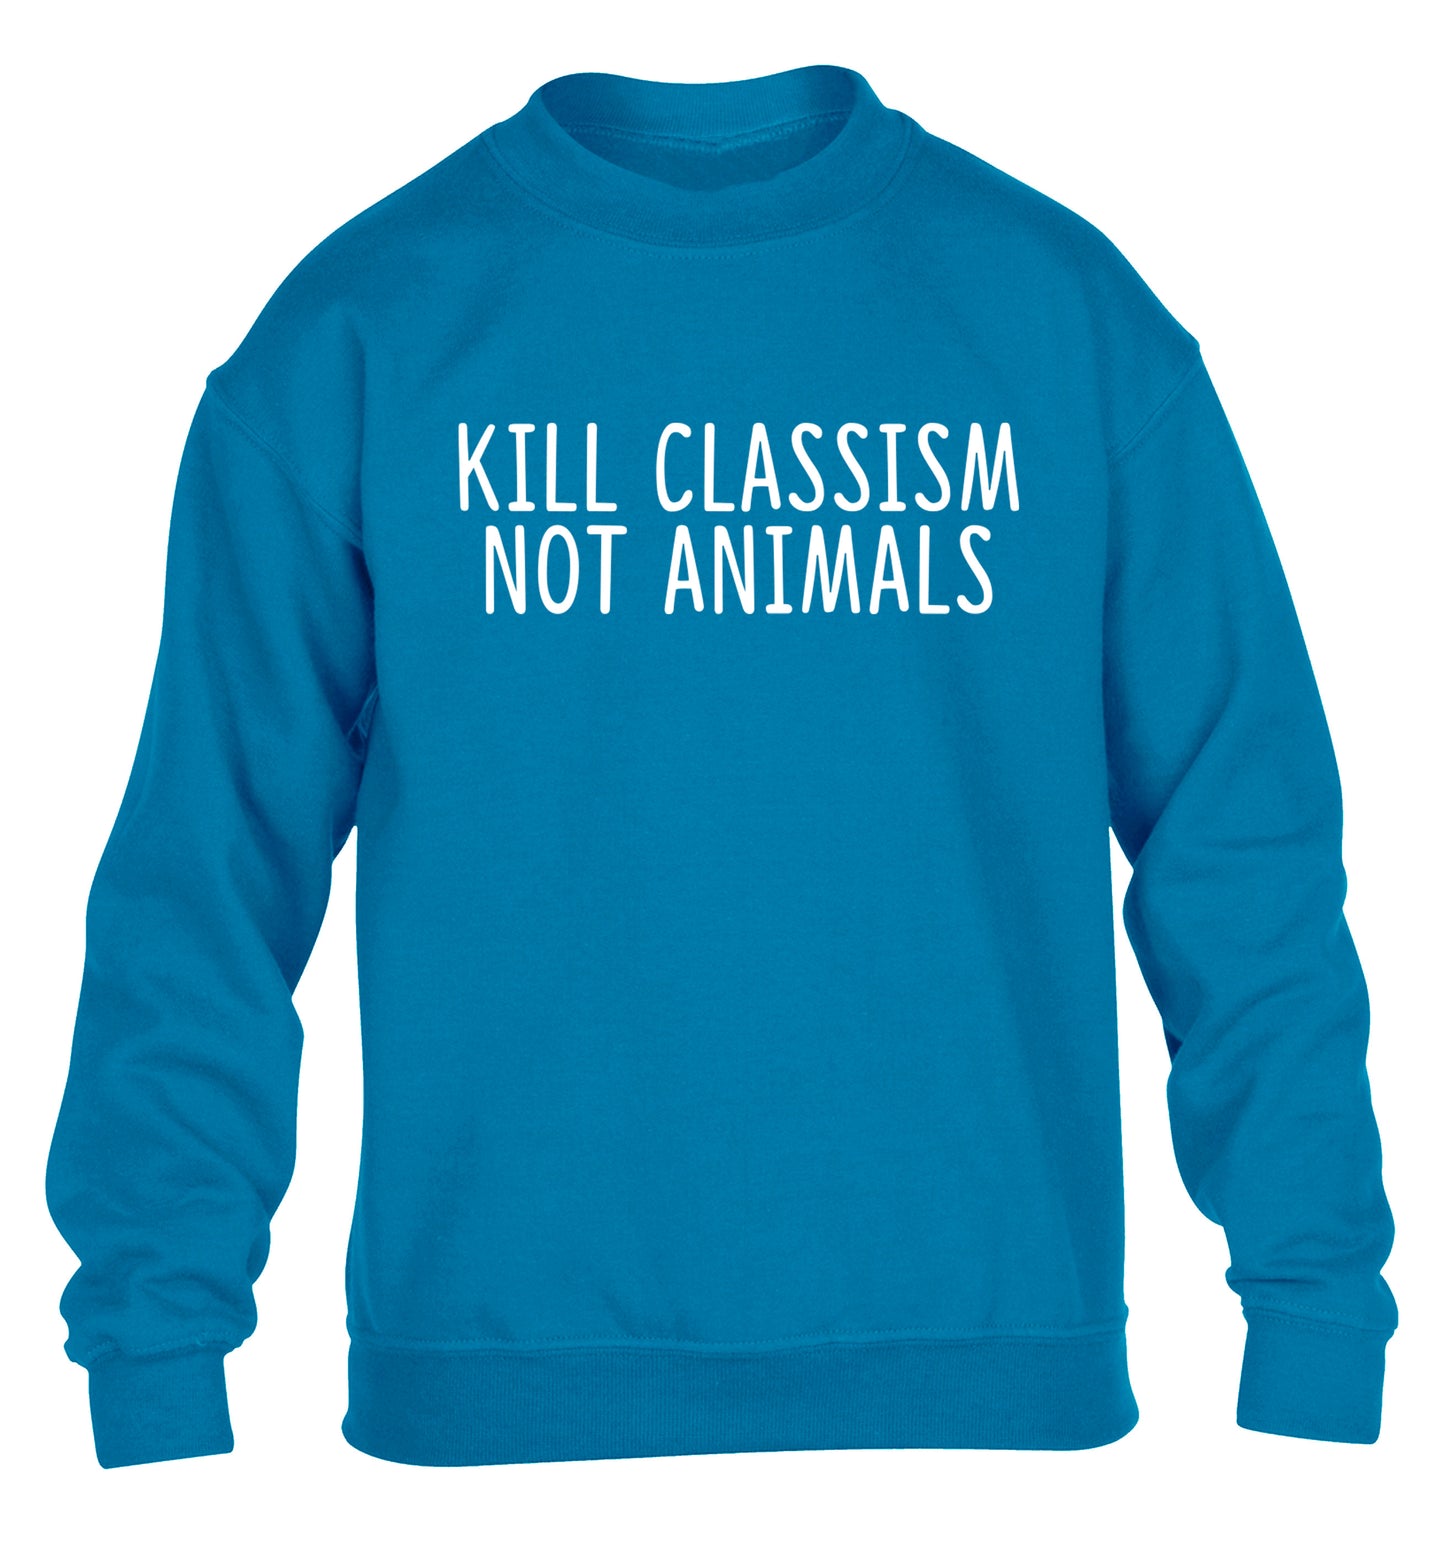 Kill Classism Not Animals children's blue sweater 12-13 Years